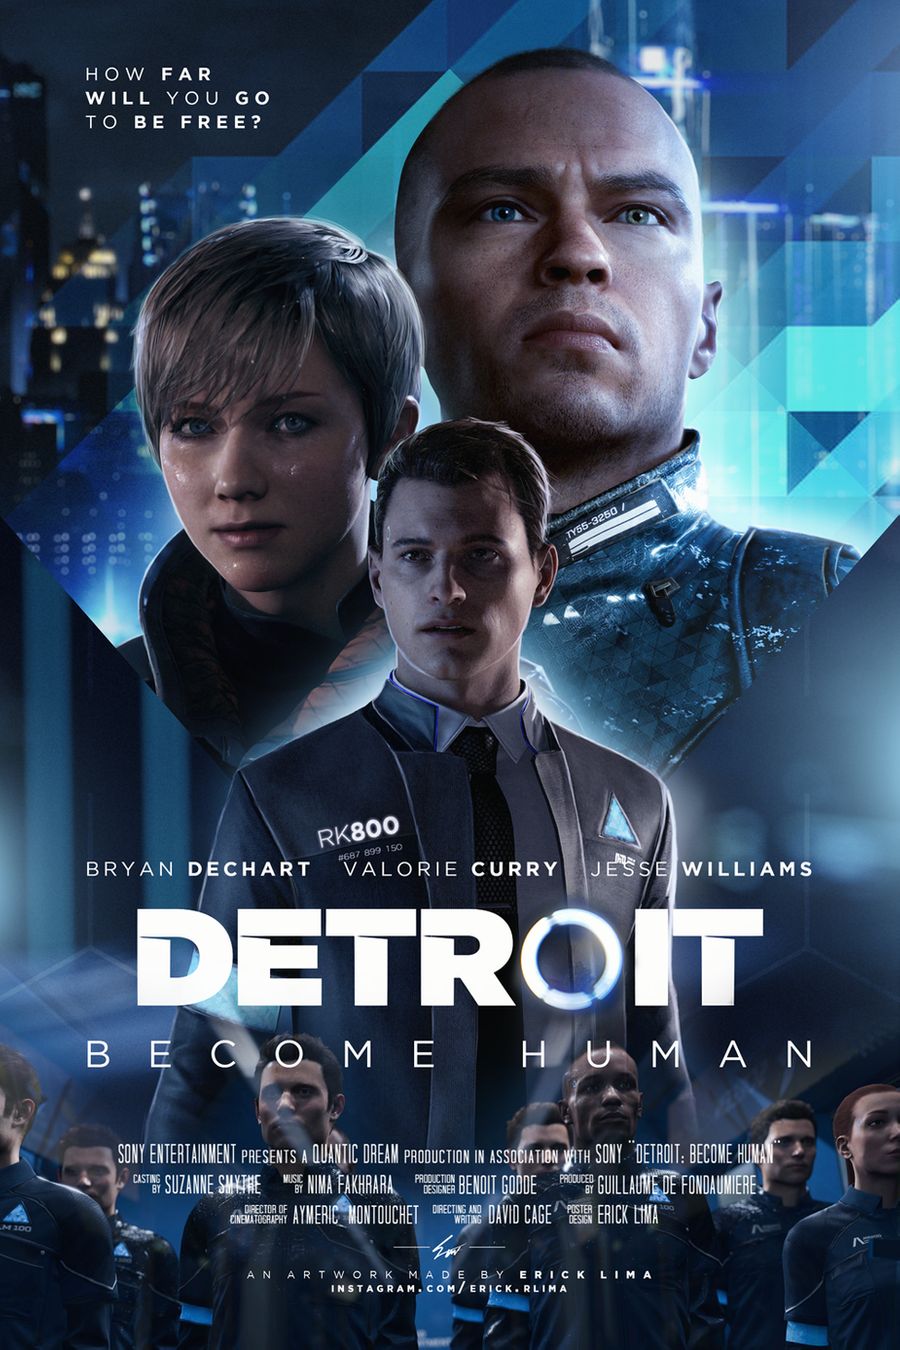 Jogo Detroit Become Human - PS4, Shopping